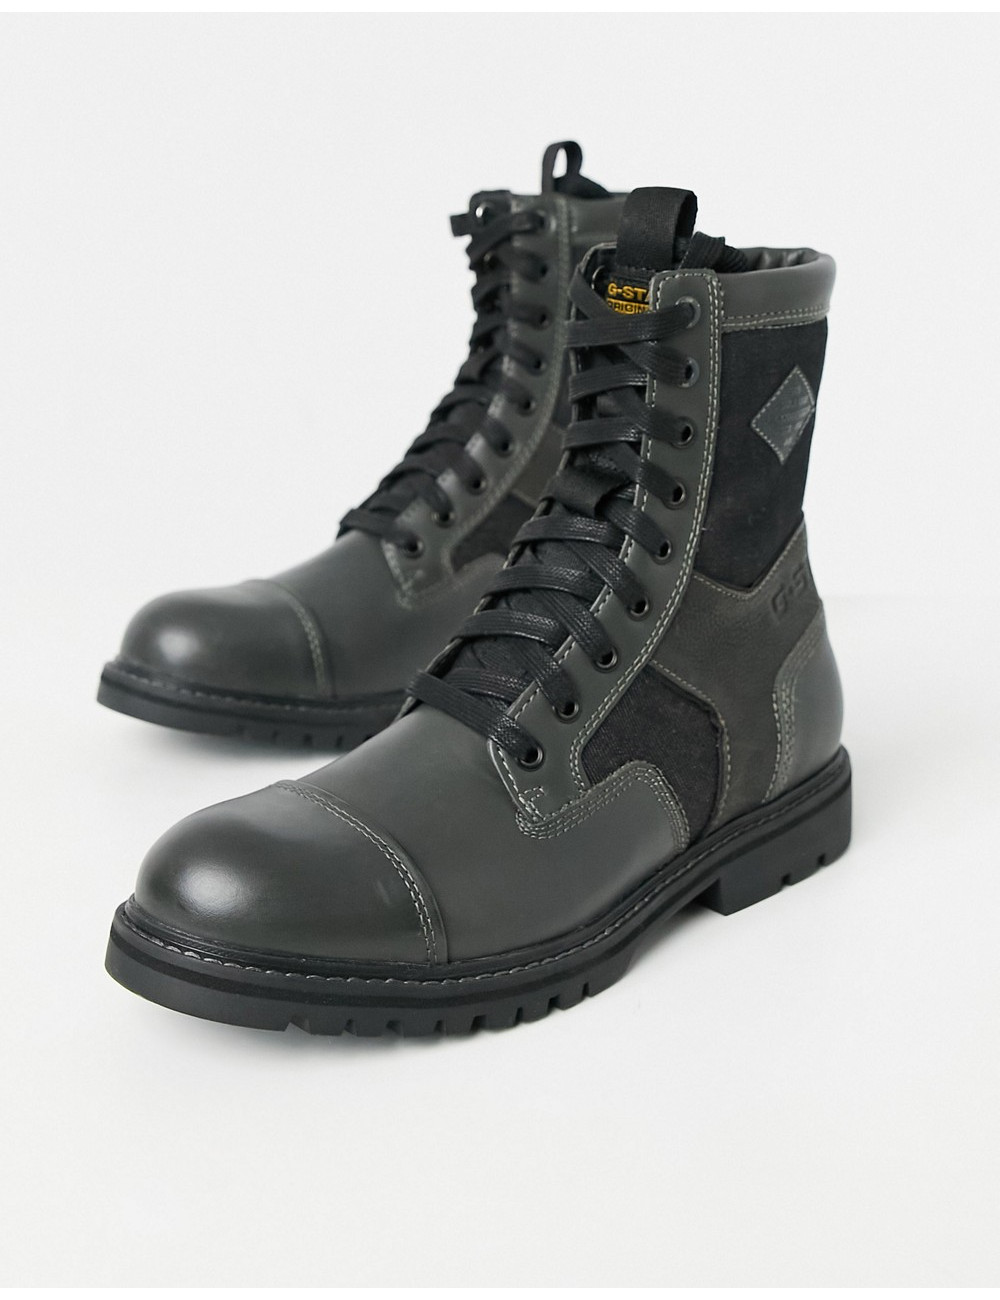 G-Star tendric boots